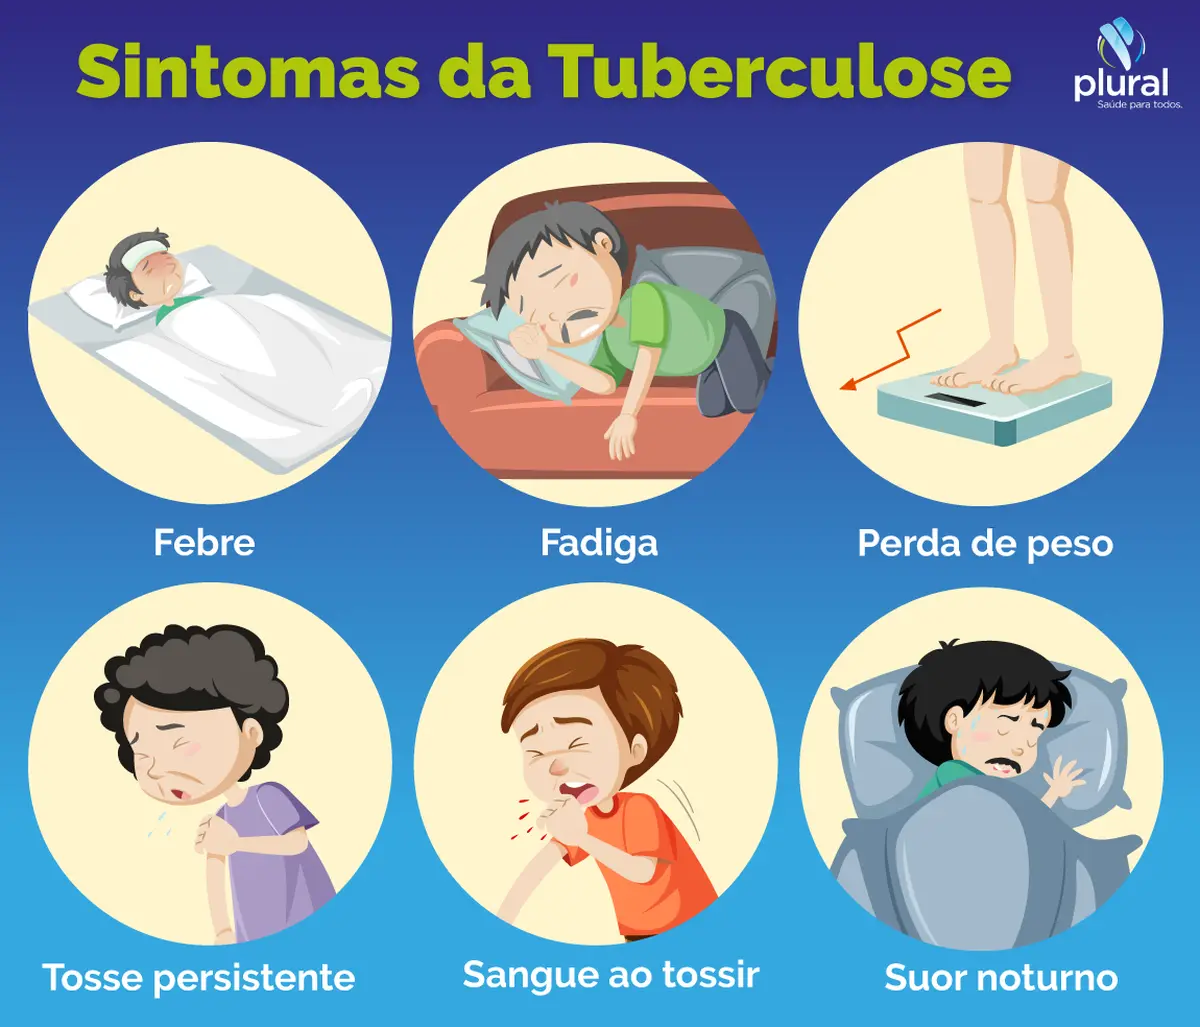 Sintomas da tuberculose